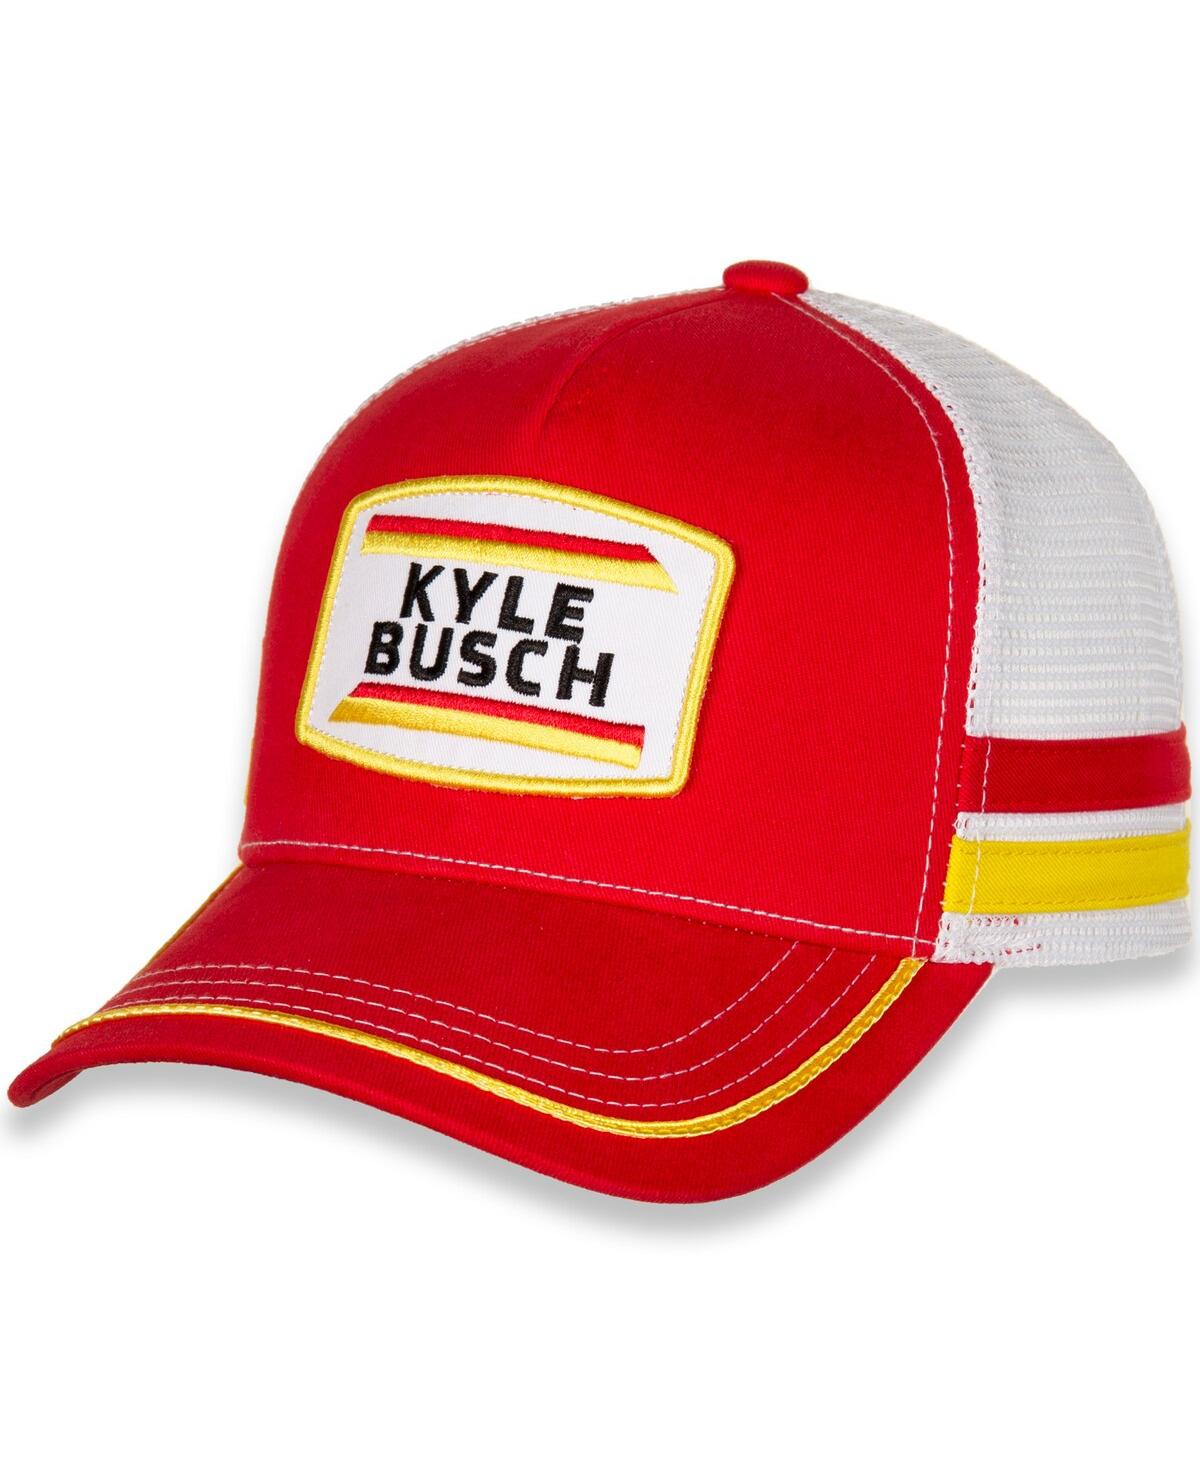 Men's Joe Gibbs Racing Team Collection Red, White Kyle Busch Retro Stripe Snapback Adjustable Hat - Red, White